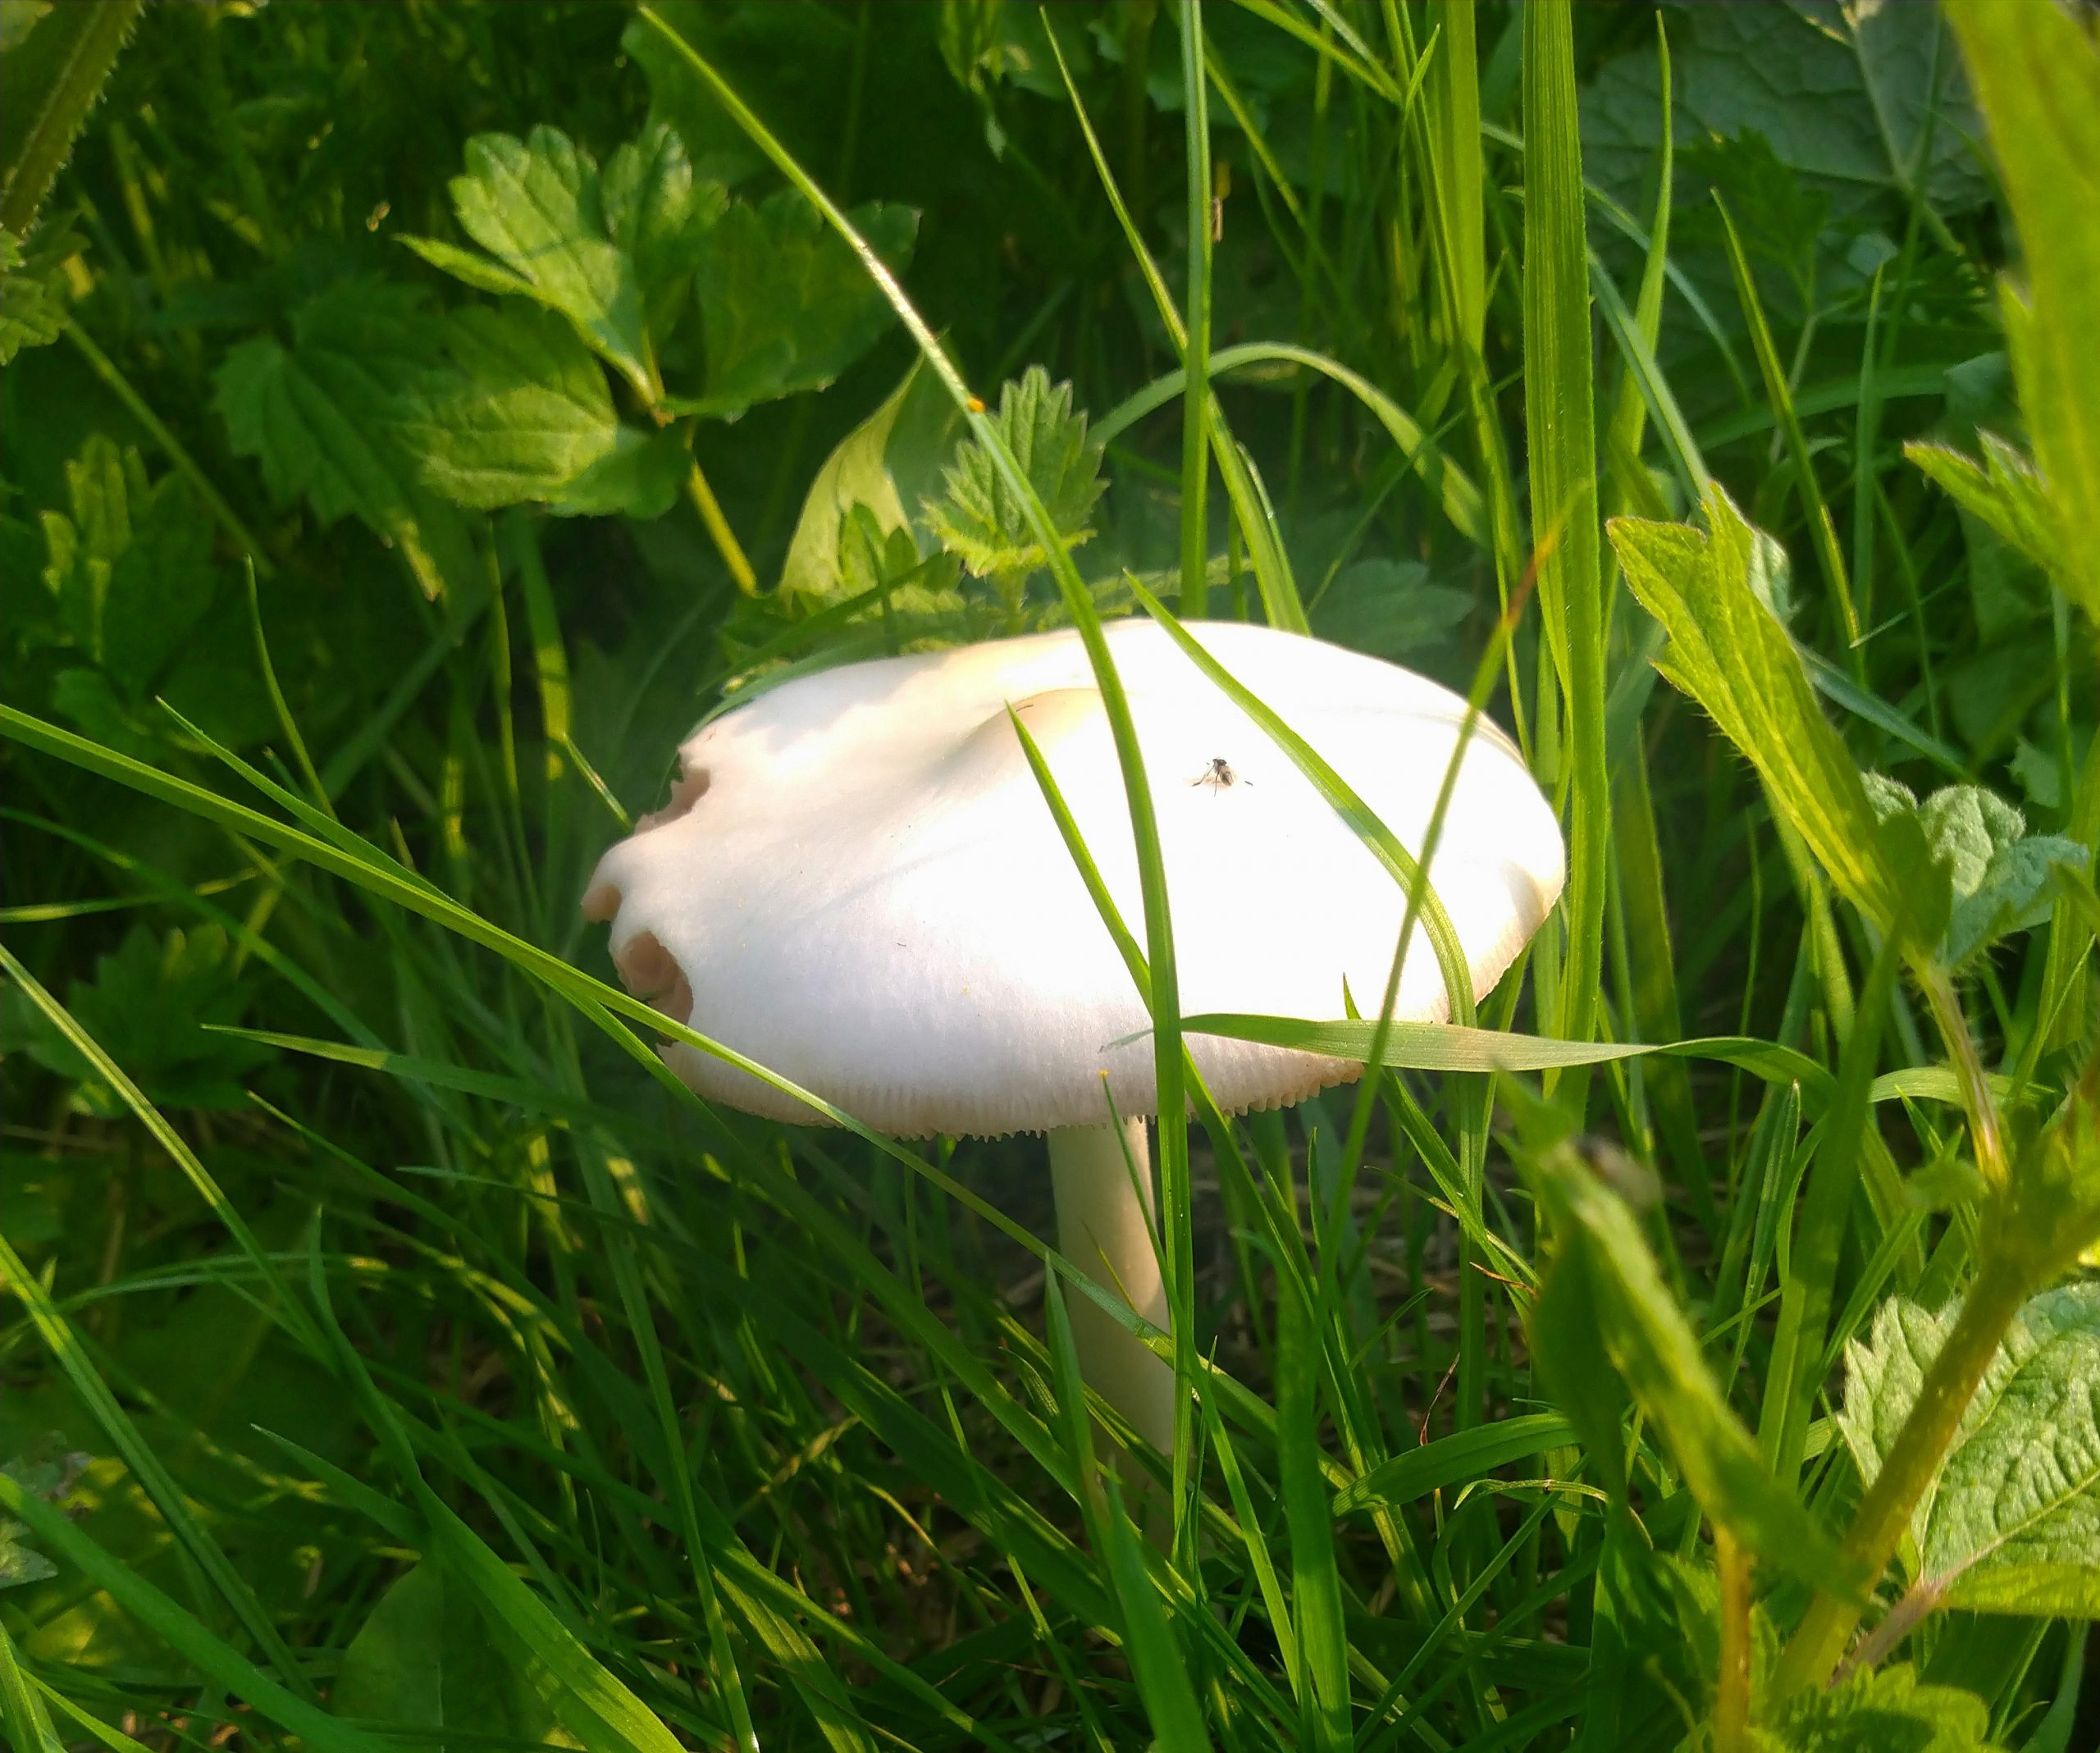 Mushroom Photograph